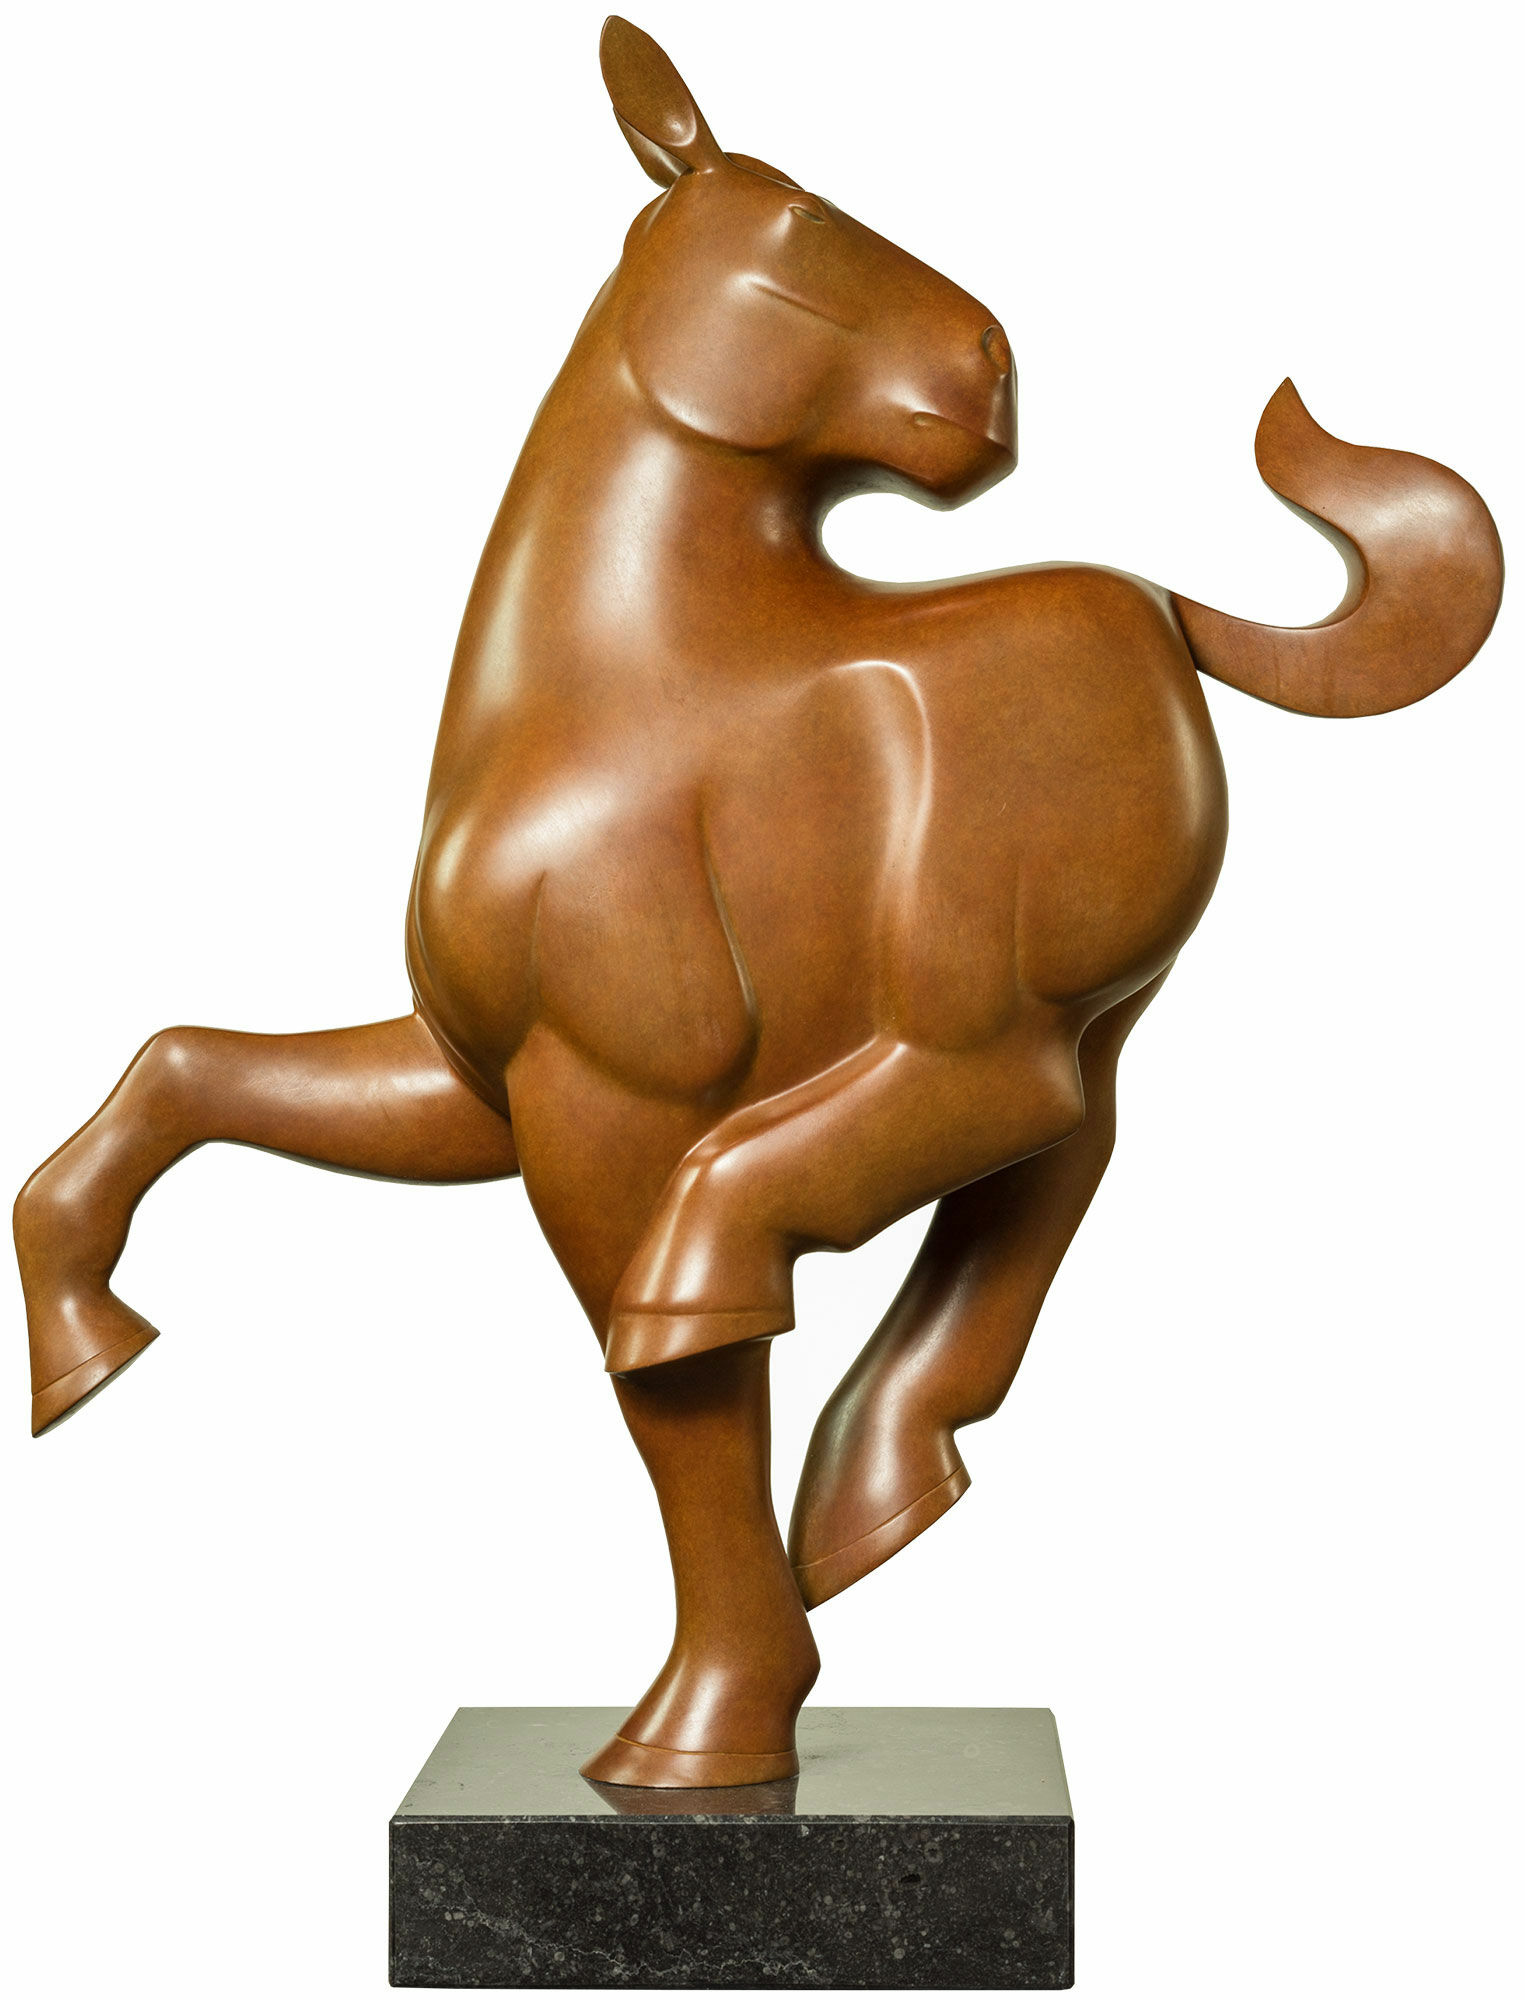 Skulptur "Hest", bronze brun von Evert den Hartog